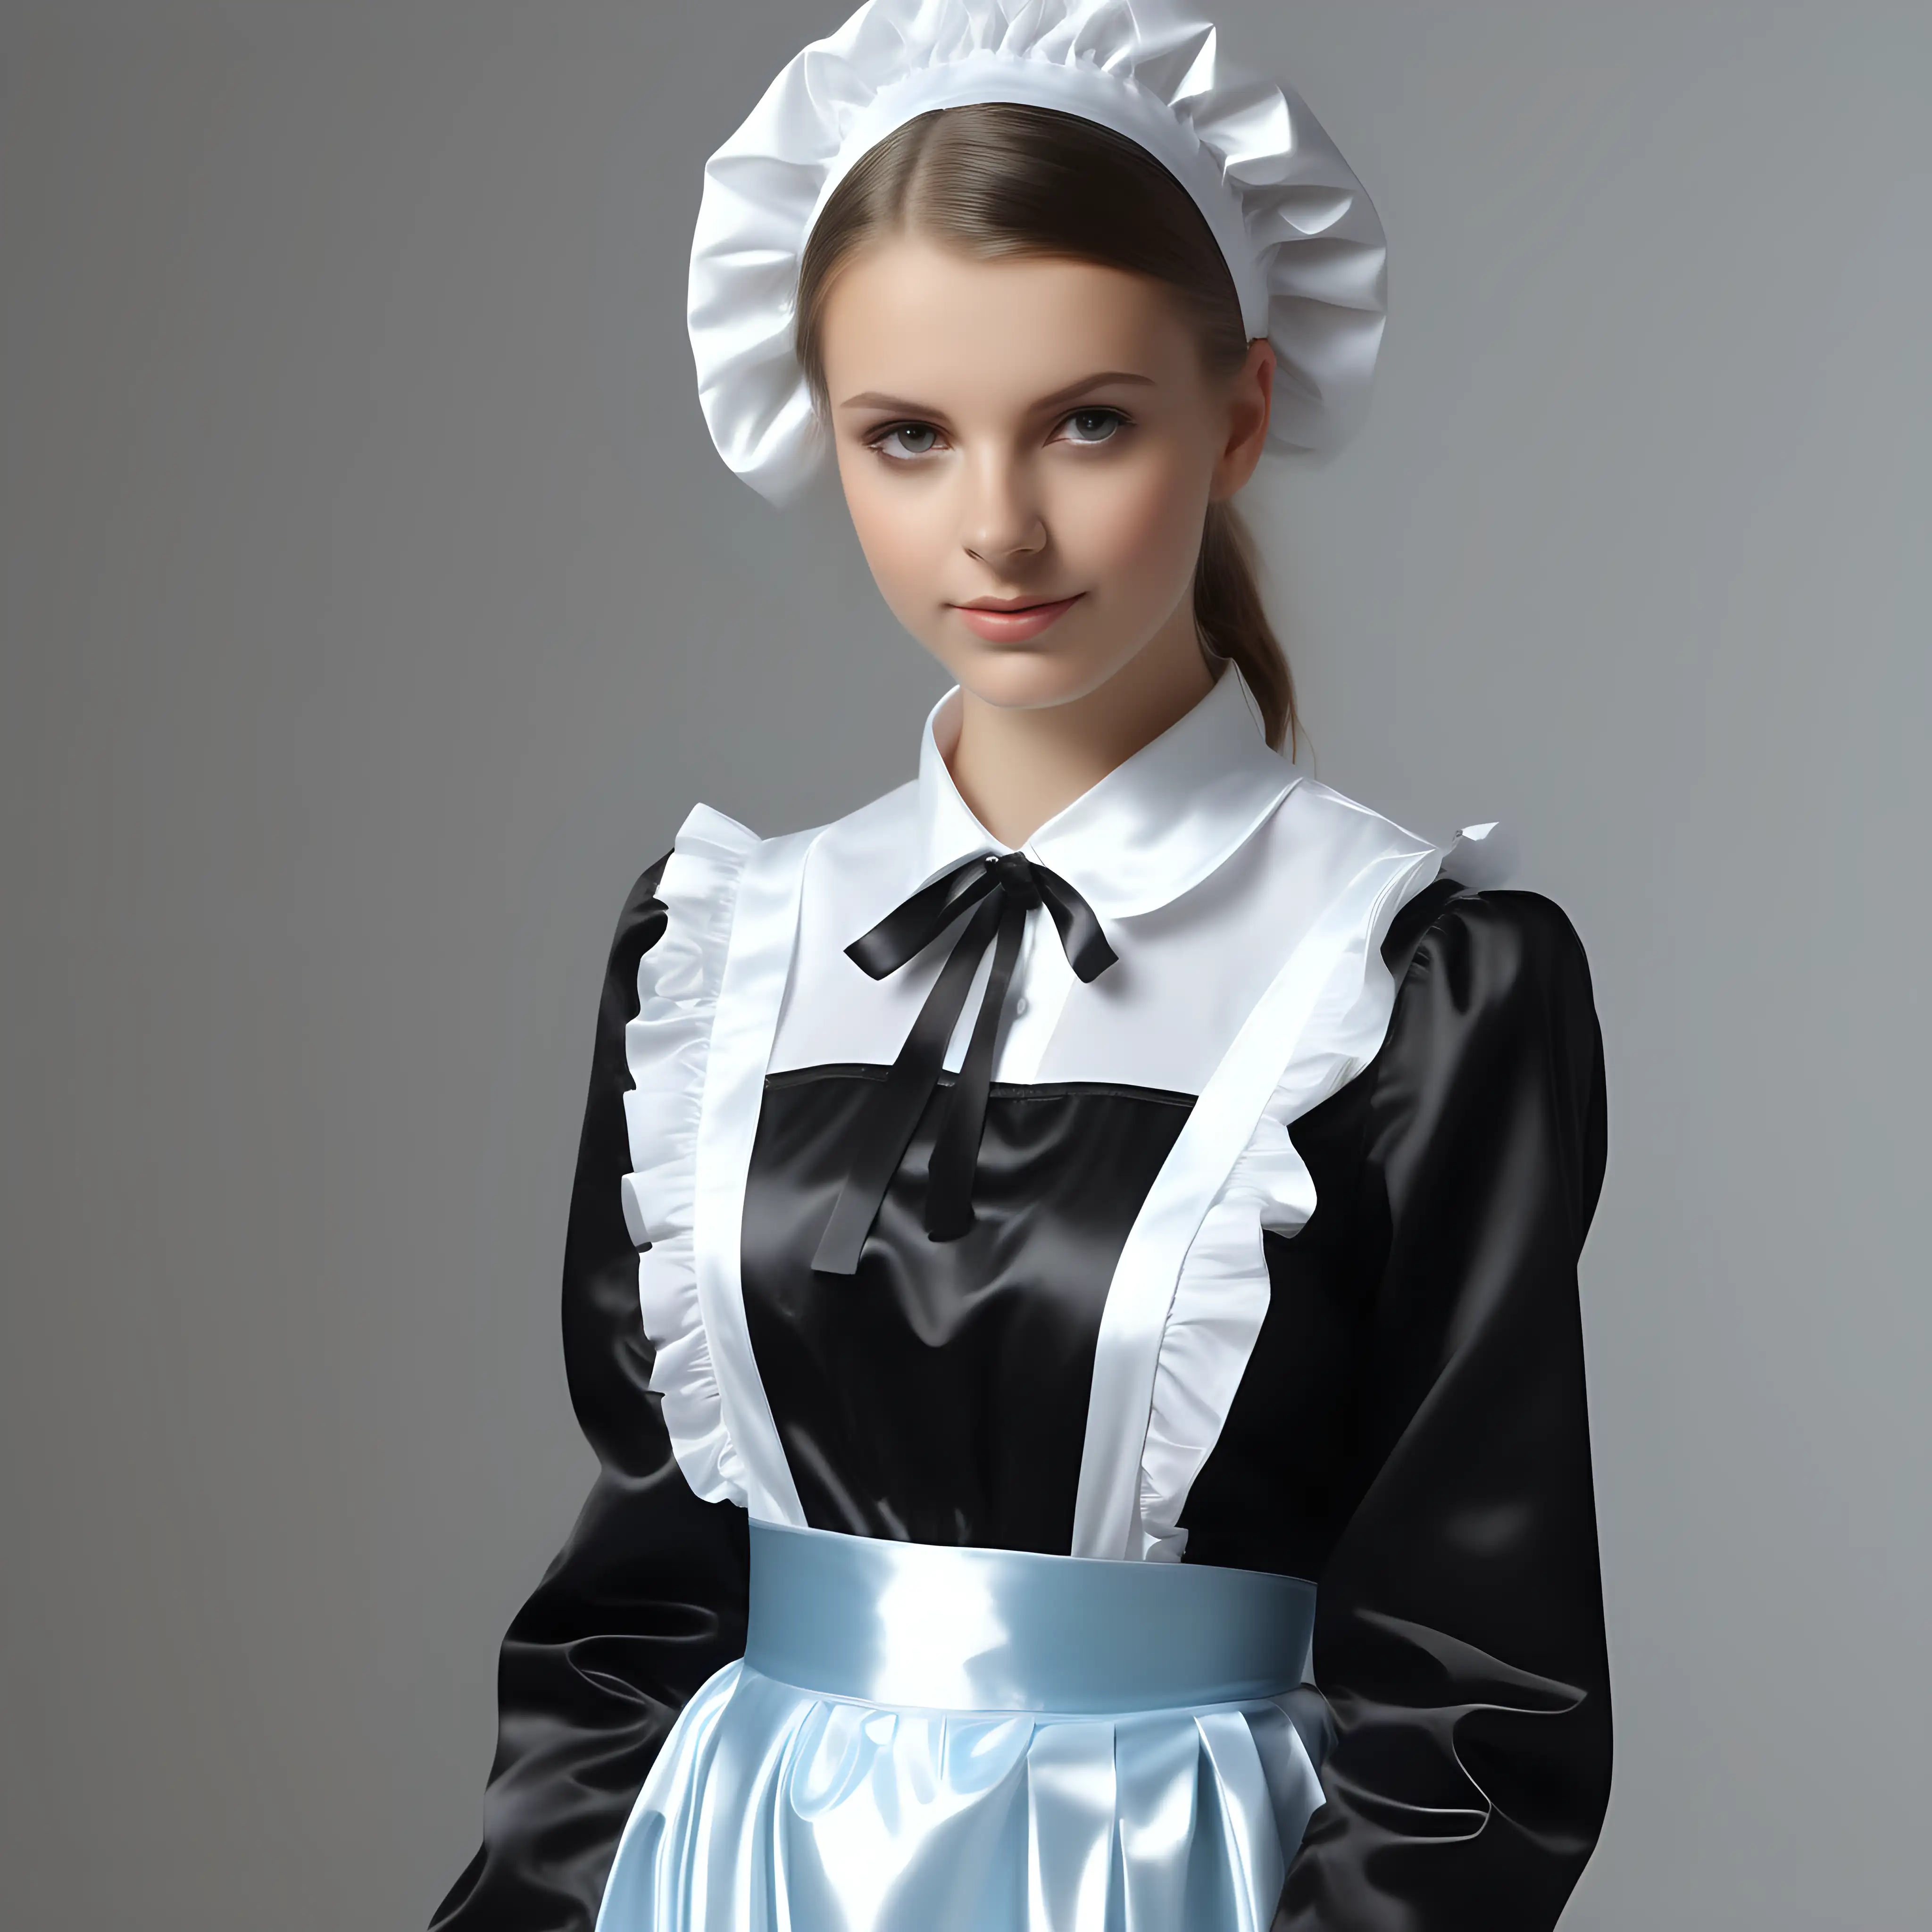 Charming European Girls in Elegant Satin Maid Uniforms